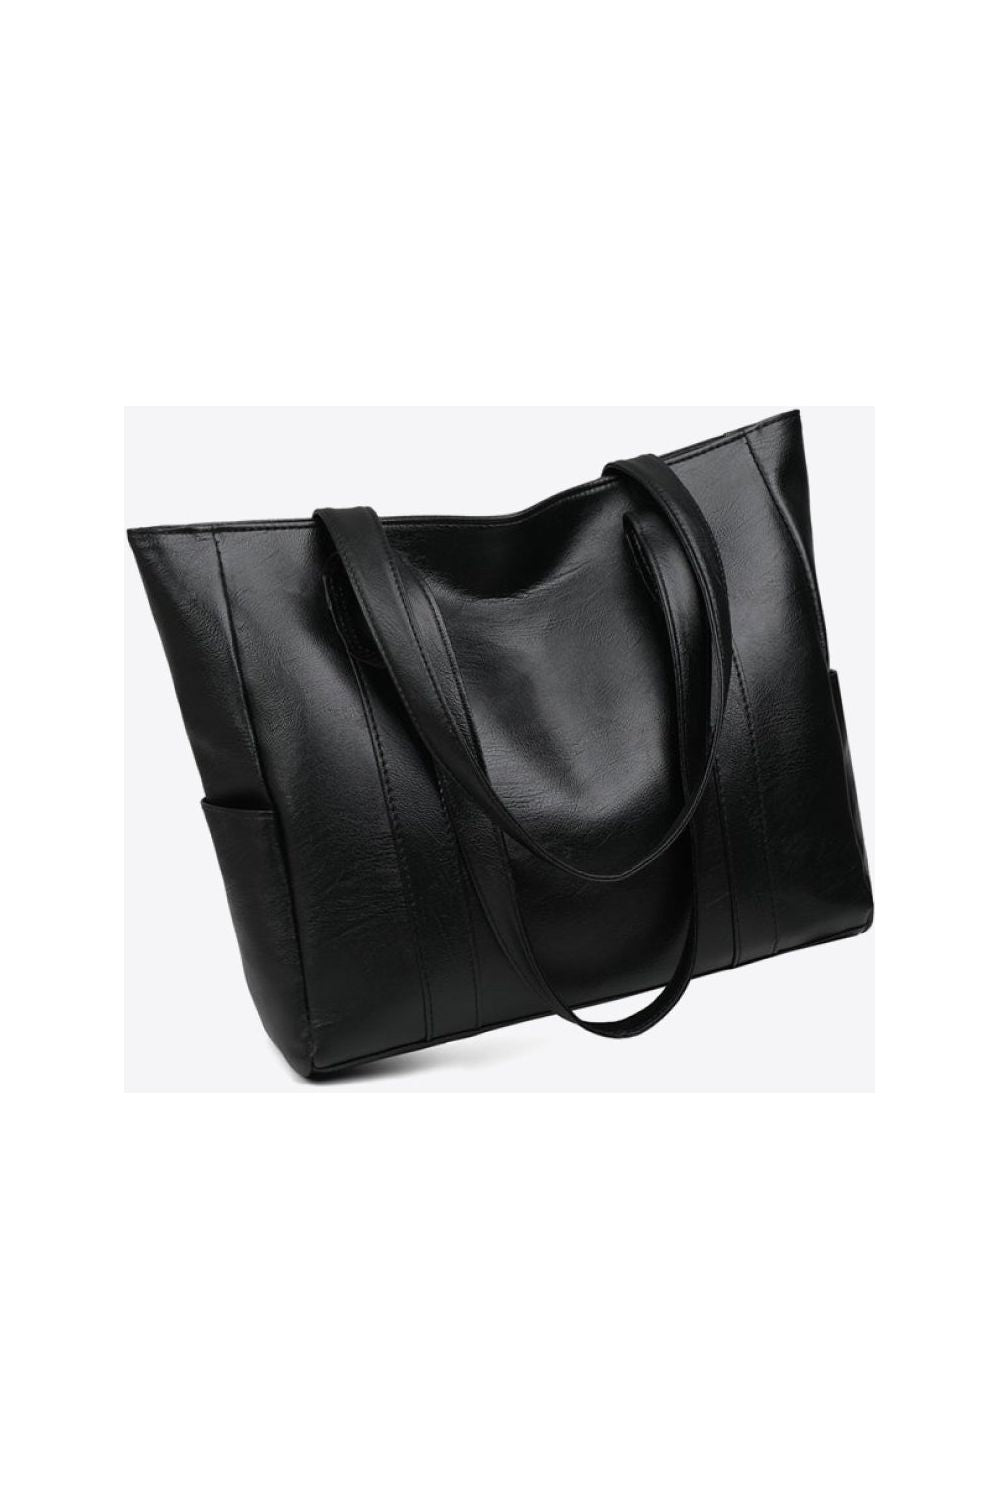 PU Leather Tote Bag.